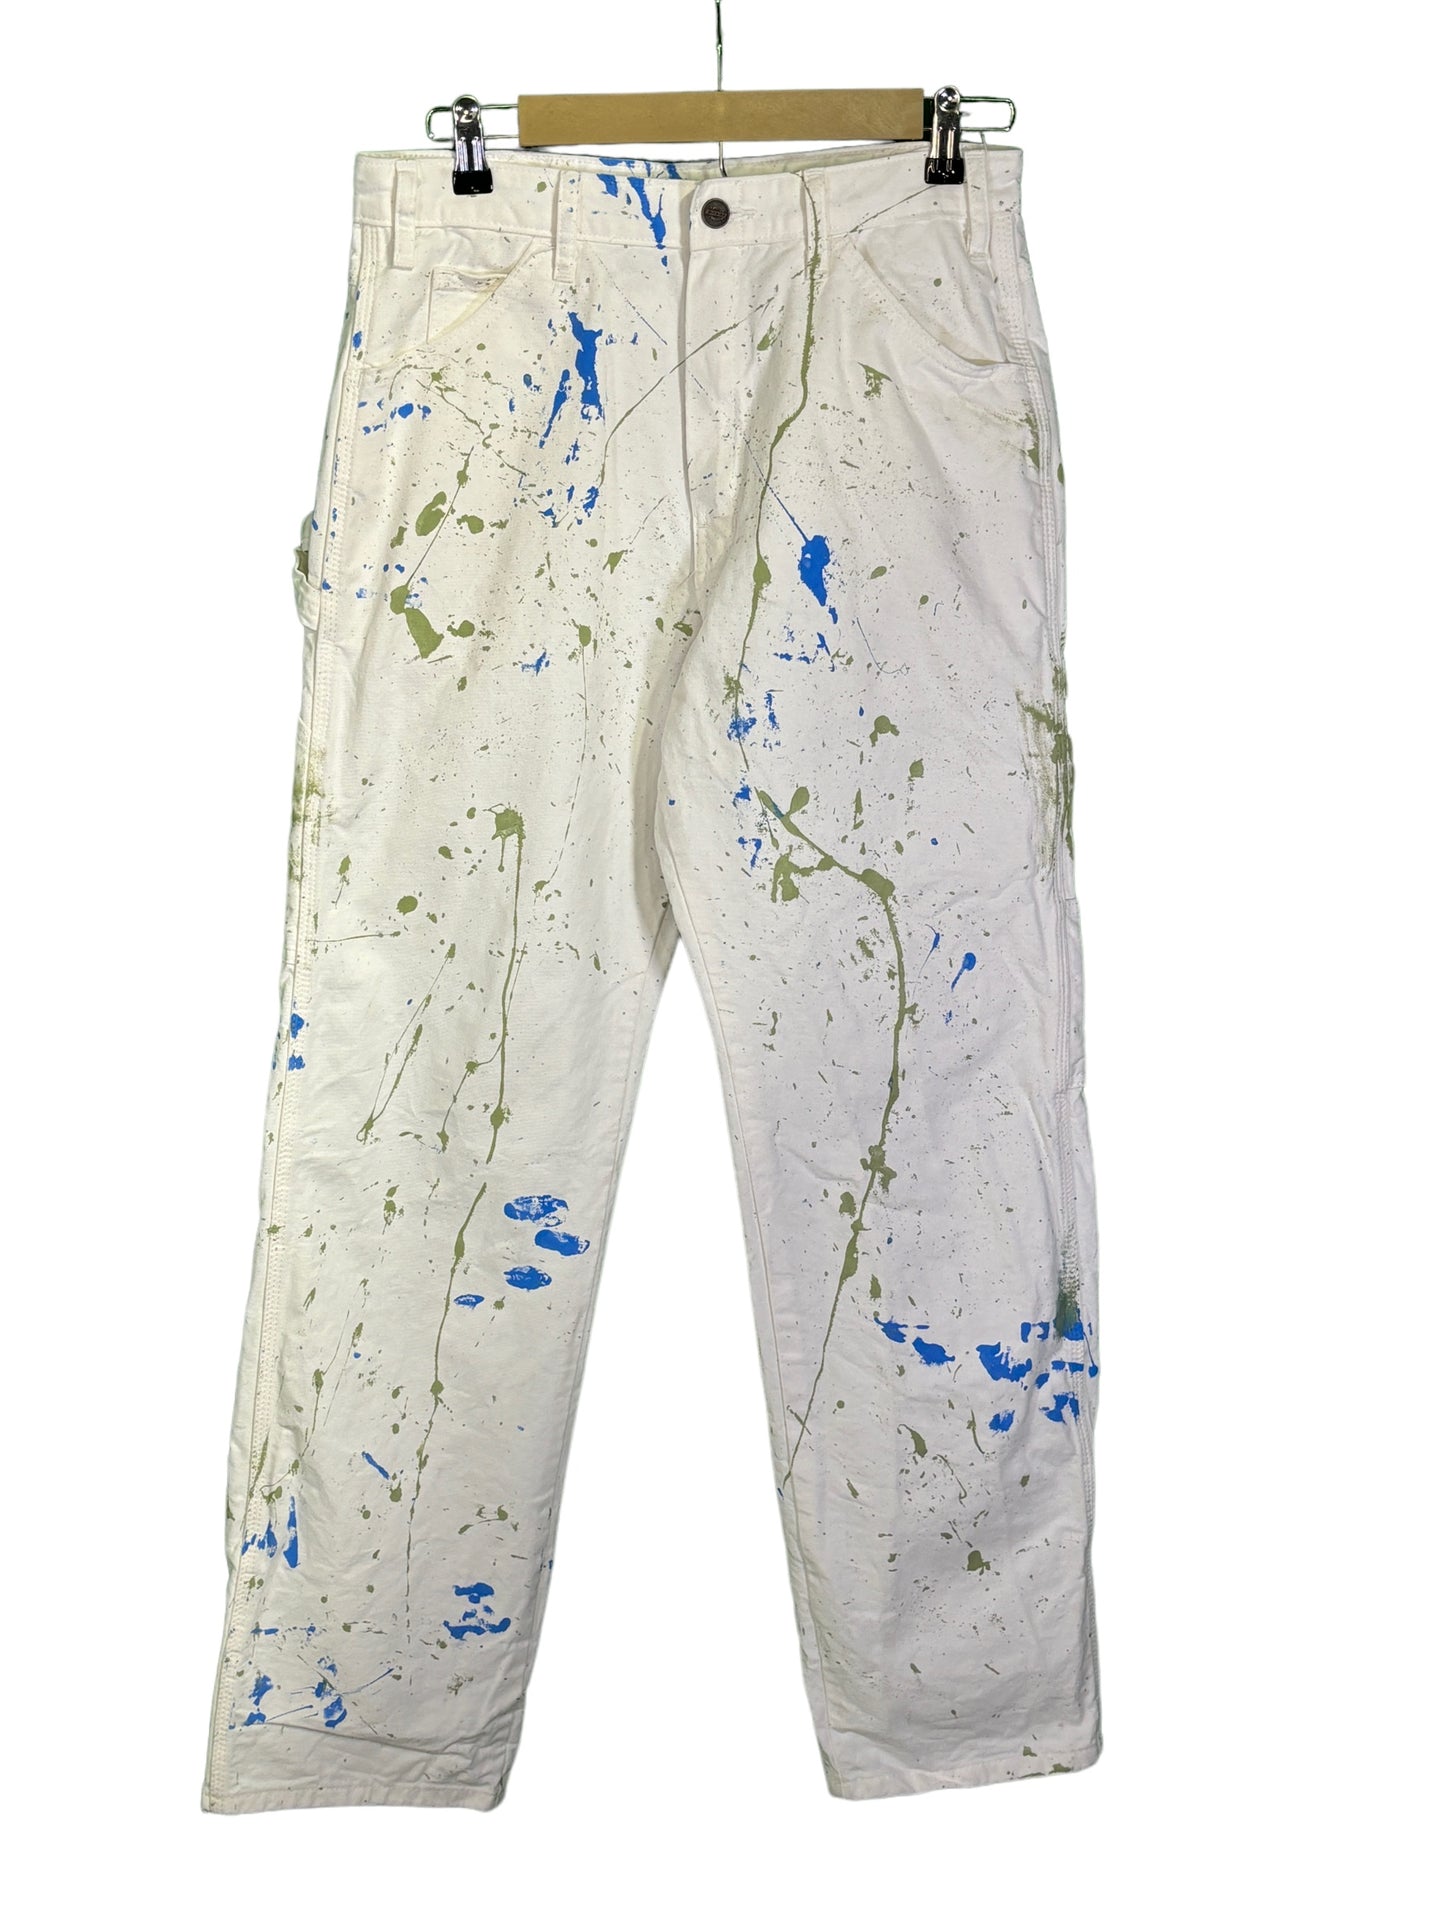 Dickies x Sherwin Williams Paint Splattered Pants Size 32x34